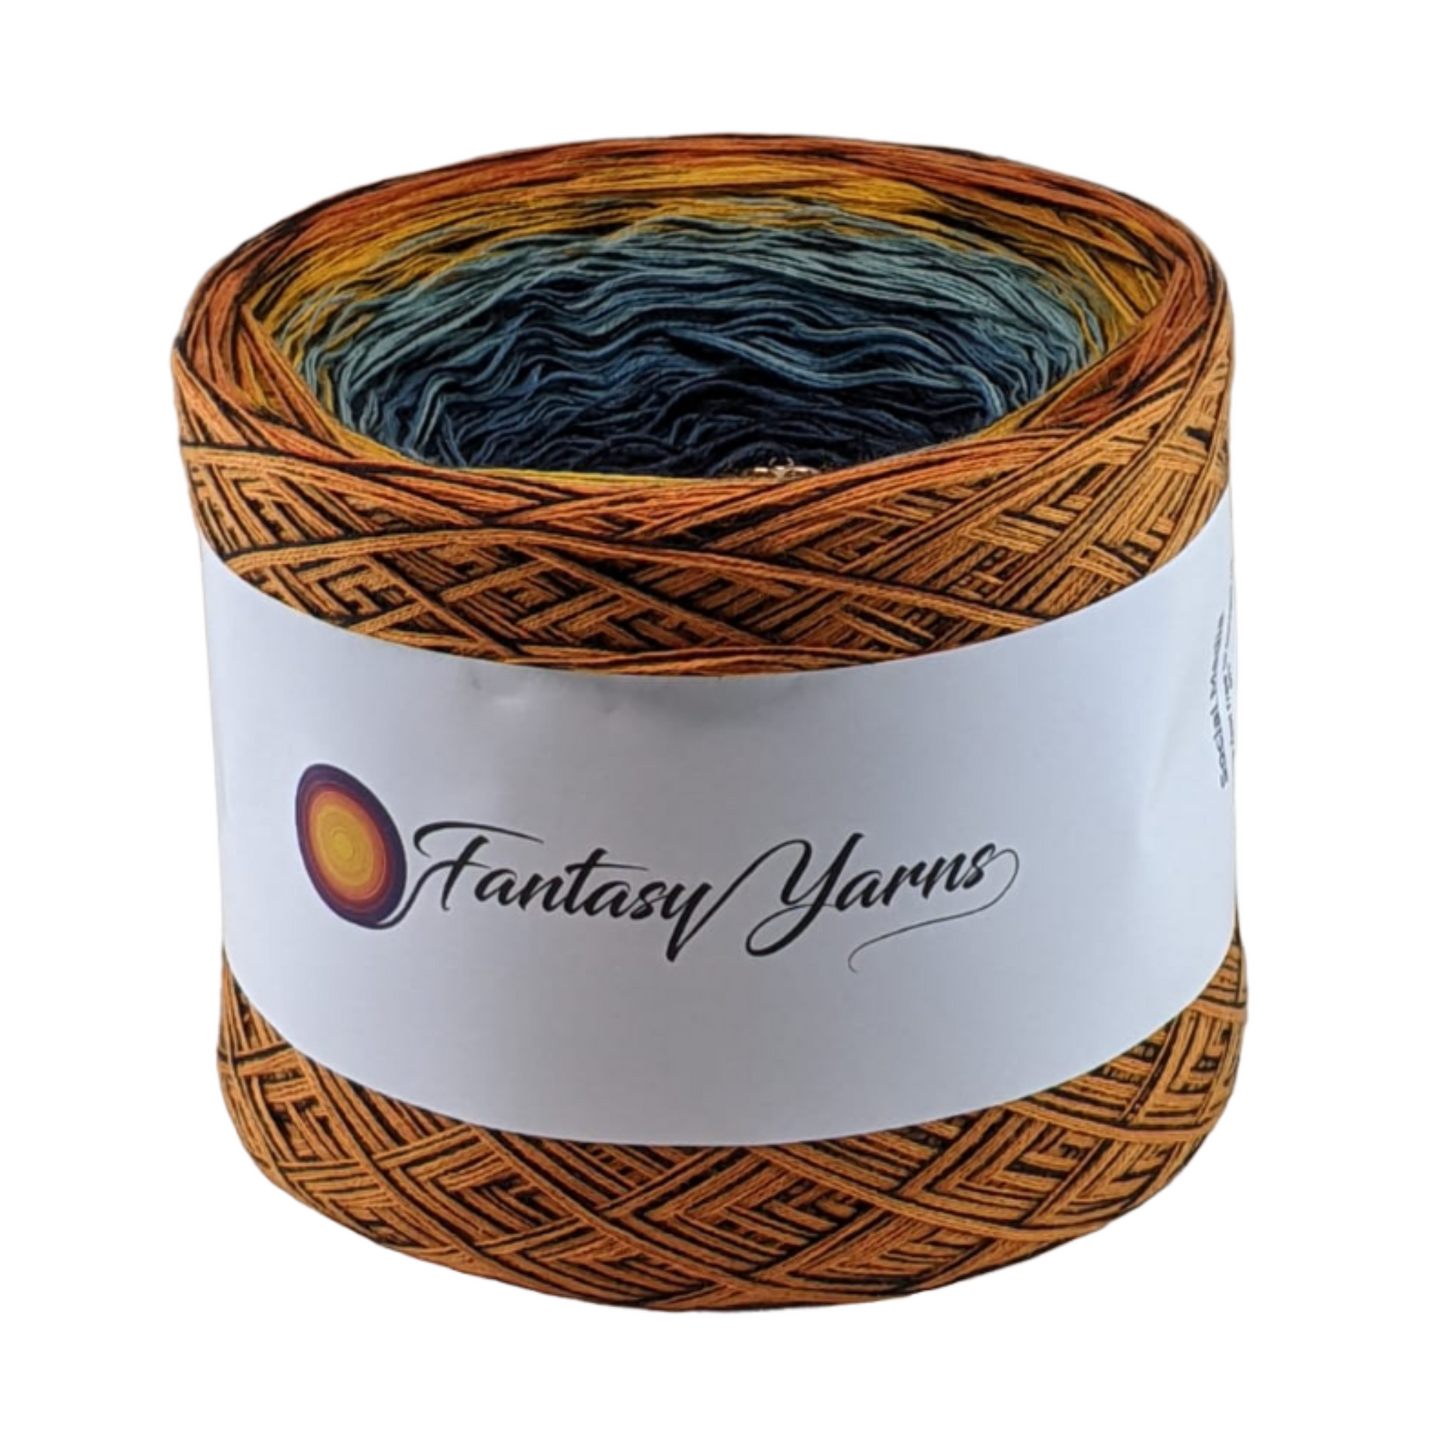 Dark Ombre - MD03 - Cotton/Acrylic Gradient Yarn Cake with Dark Thread